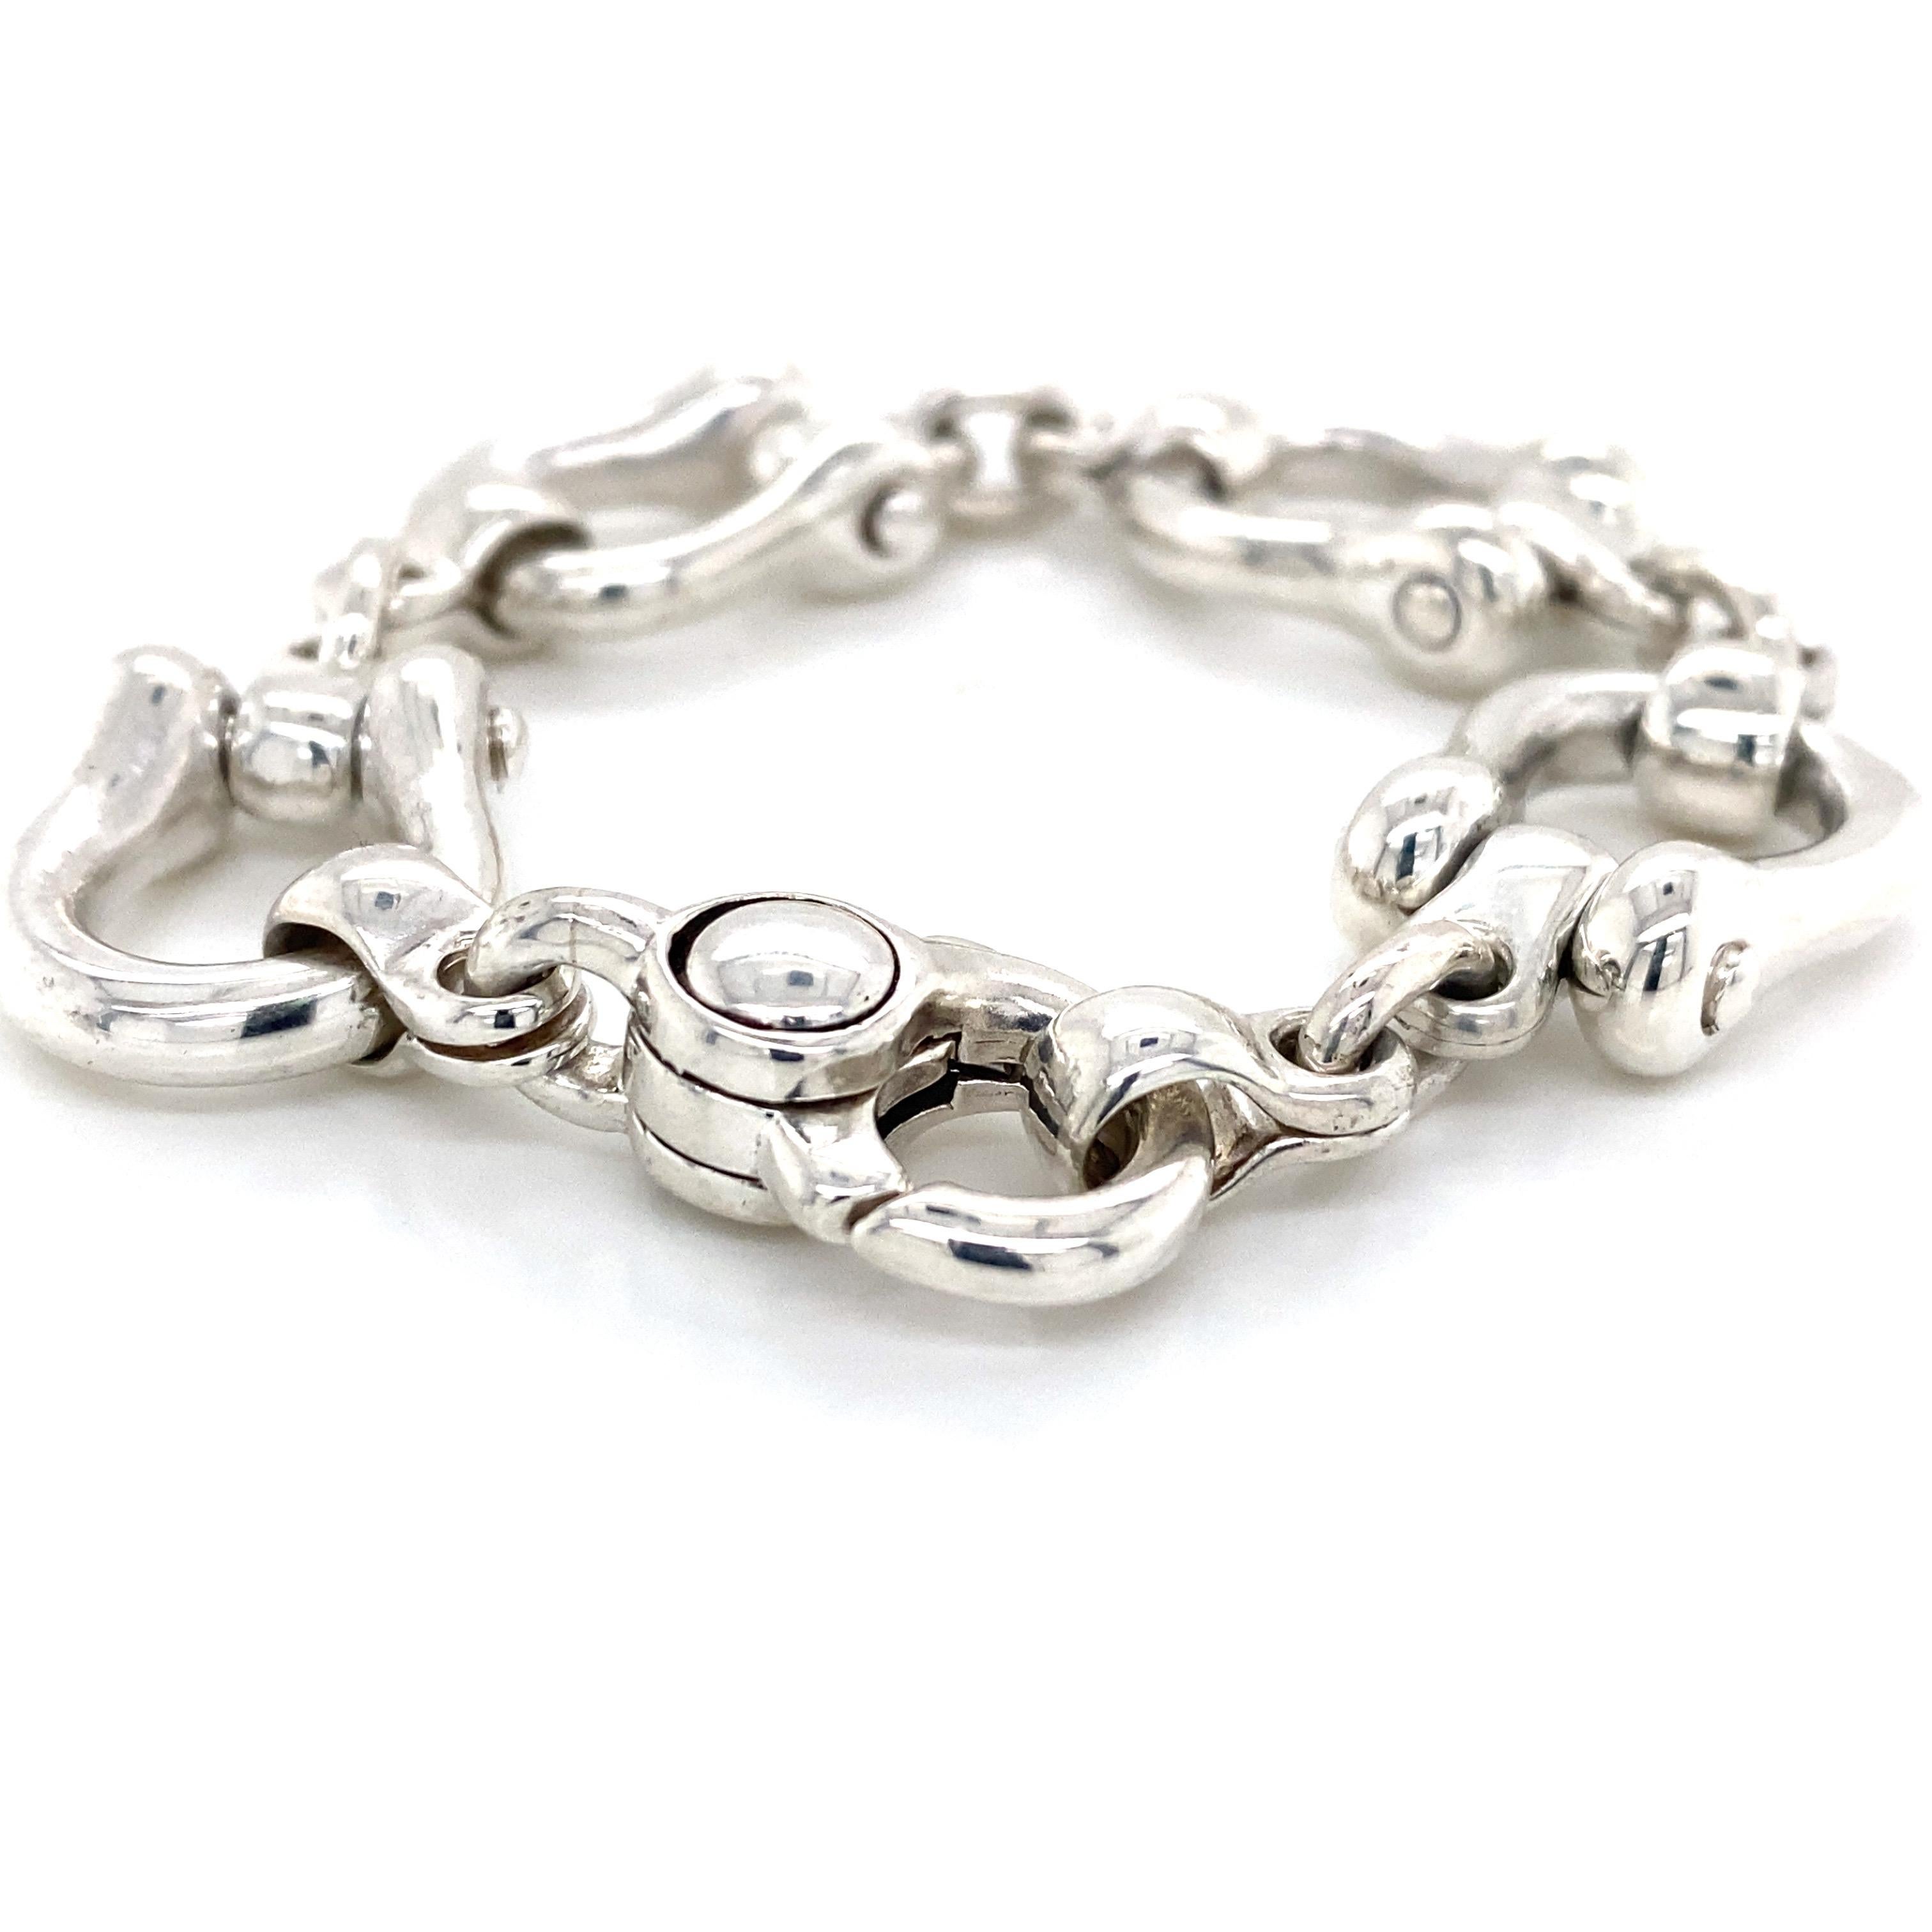 tiffany & co silver bracelet